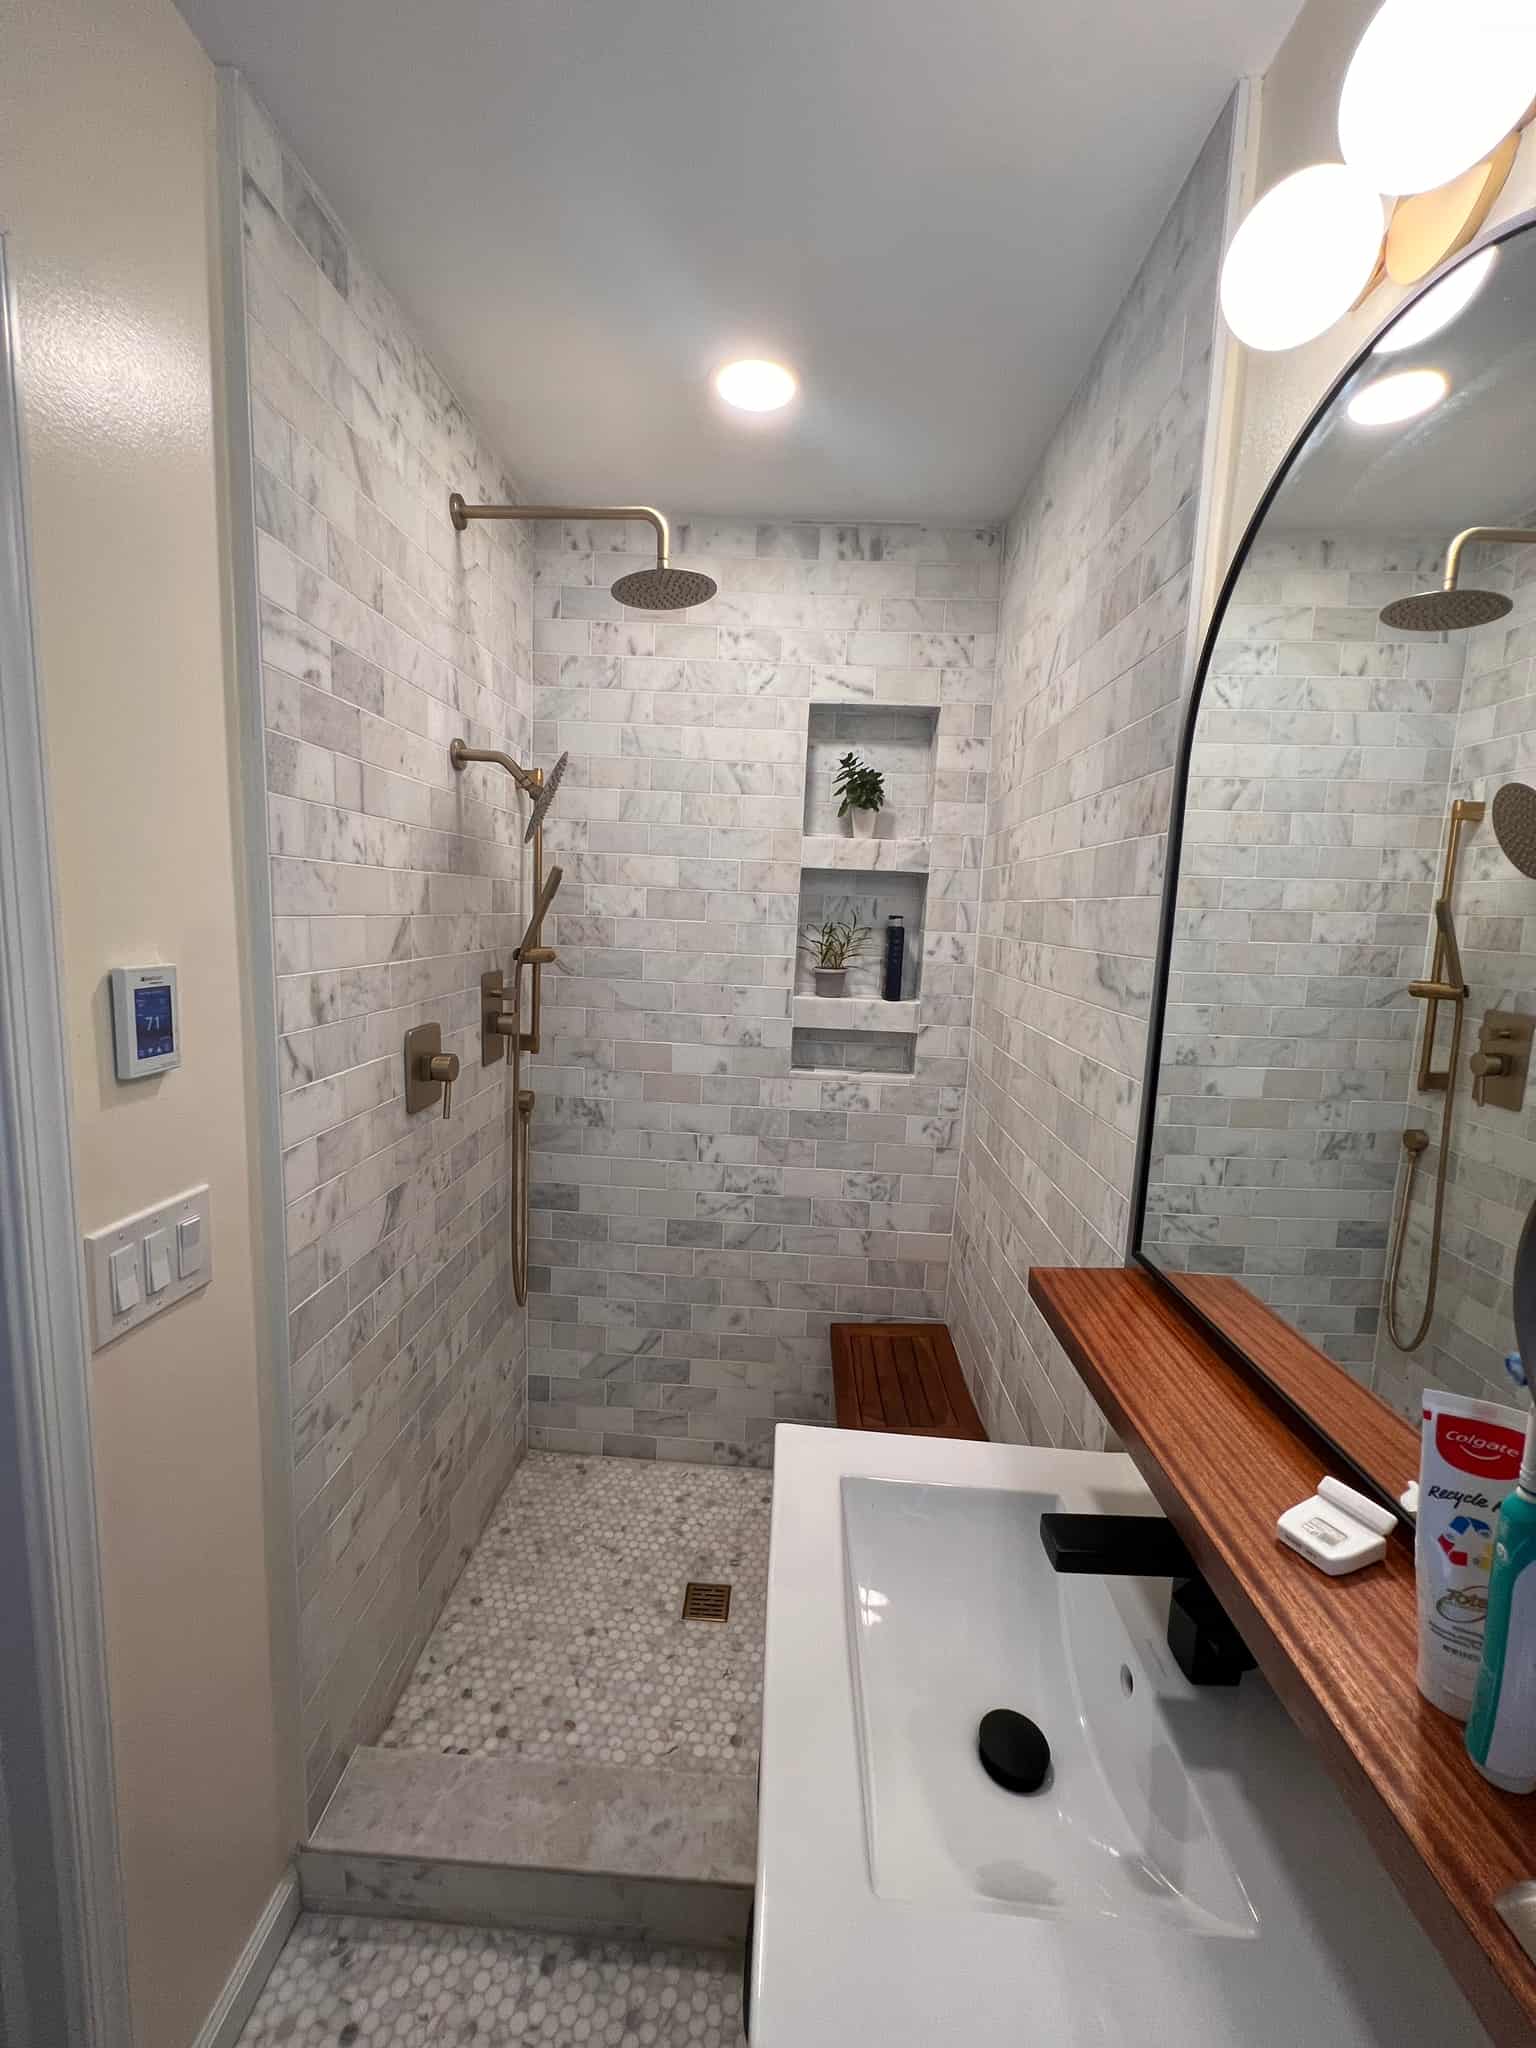 Bathroom Remodeling - Walk-in shower